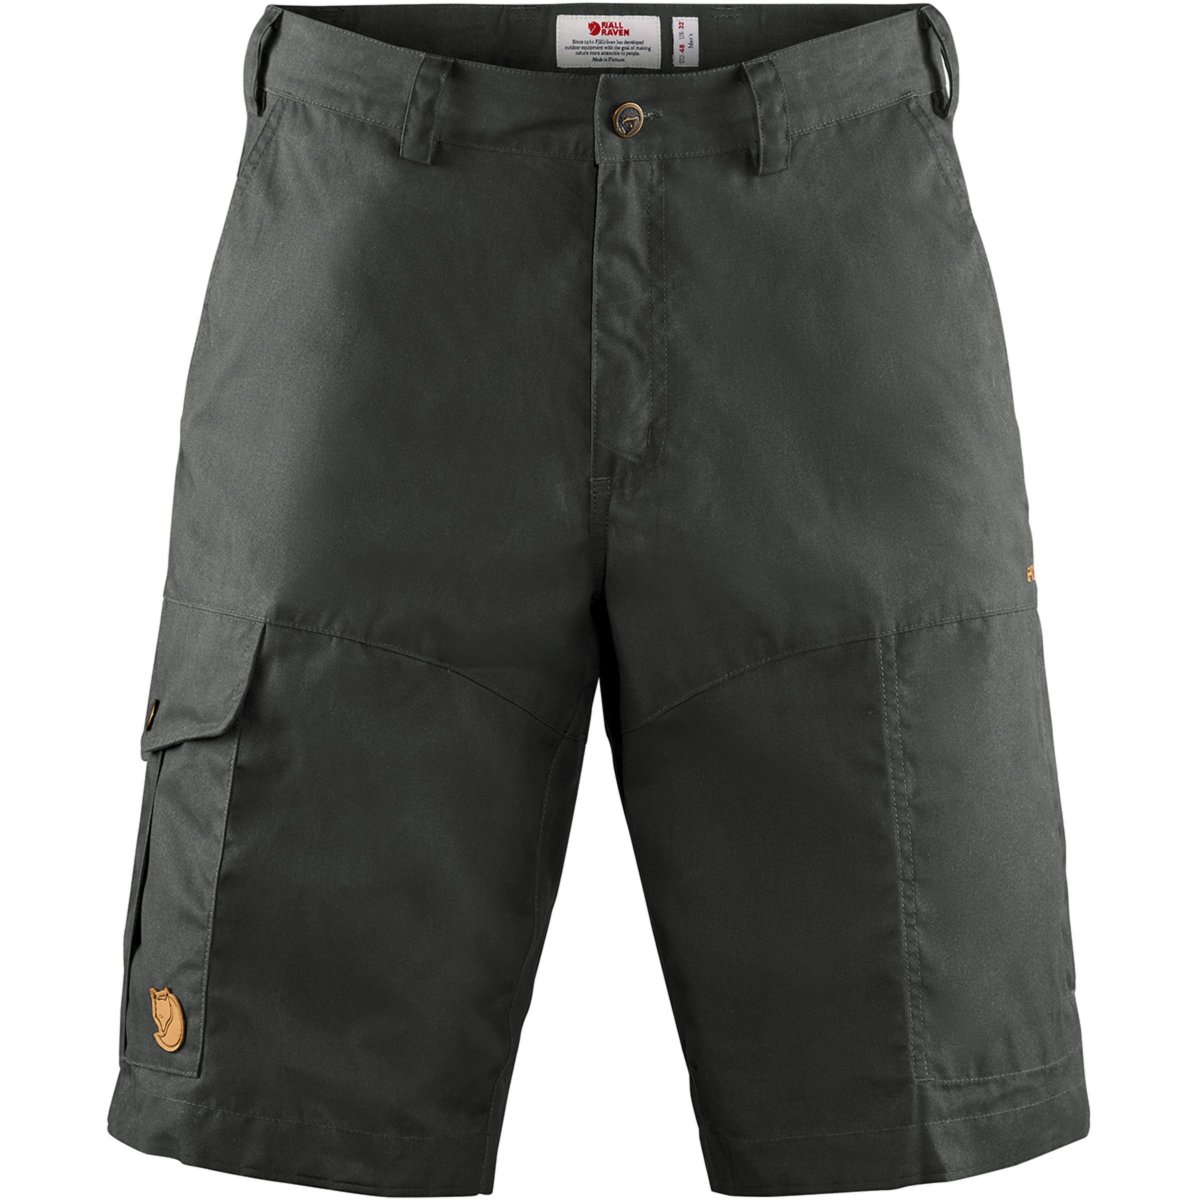 Fj&auml;llr&auml;ven Karl Pro Shorts 87224 dark grey G-1000 Shorts Outdoor Trekking Hose